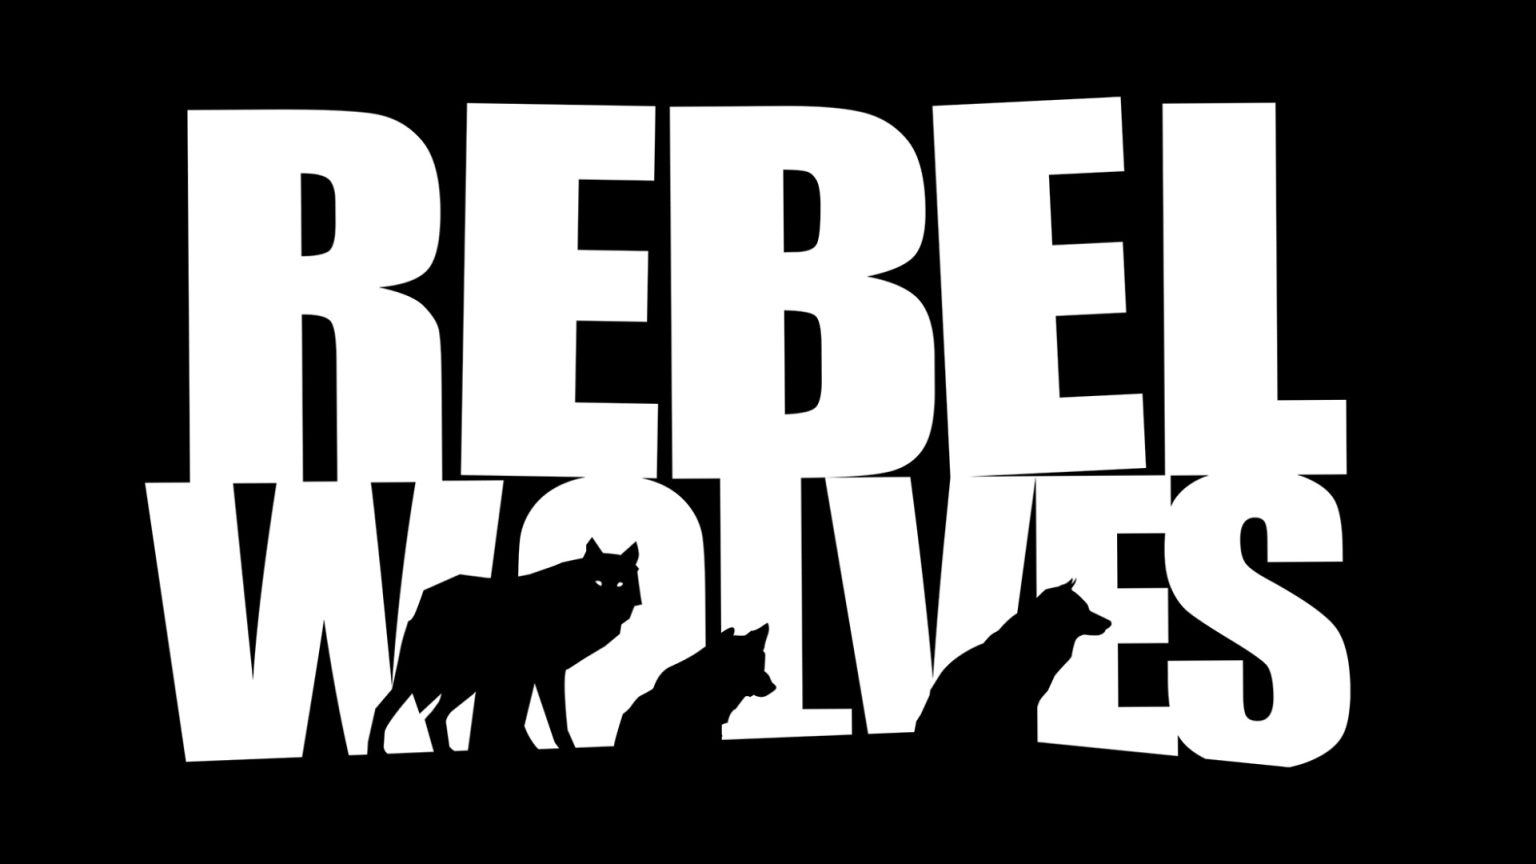 Rebel Wolves聘請《巫師3》資深人士爲創意縂監 3A奇幻RPG開發中